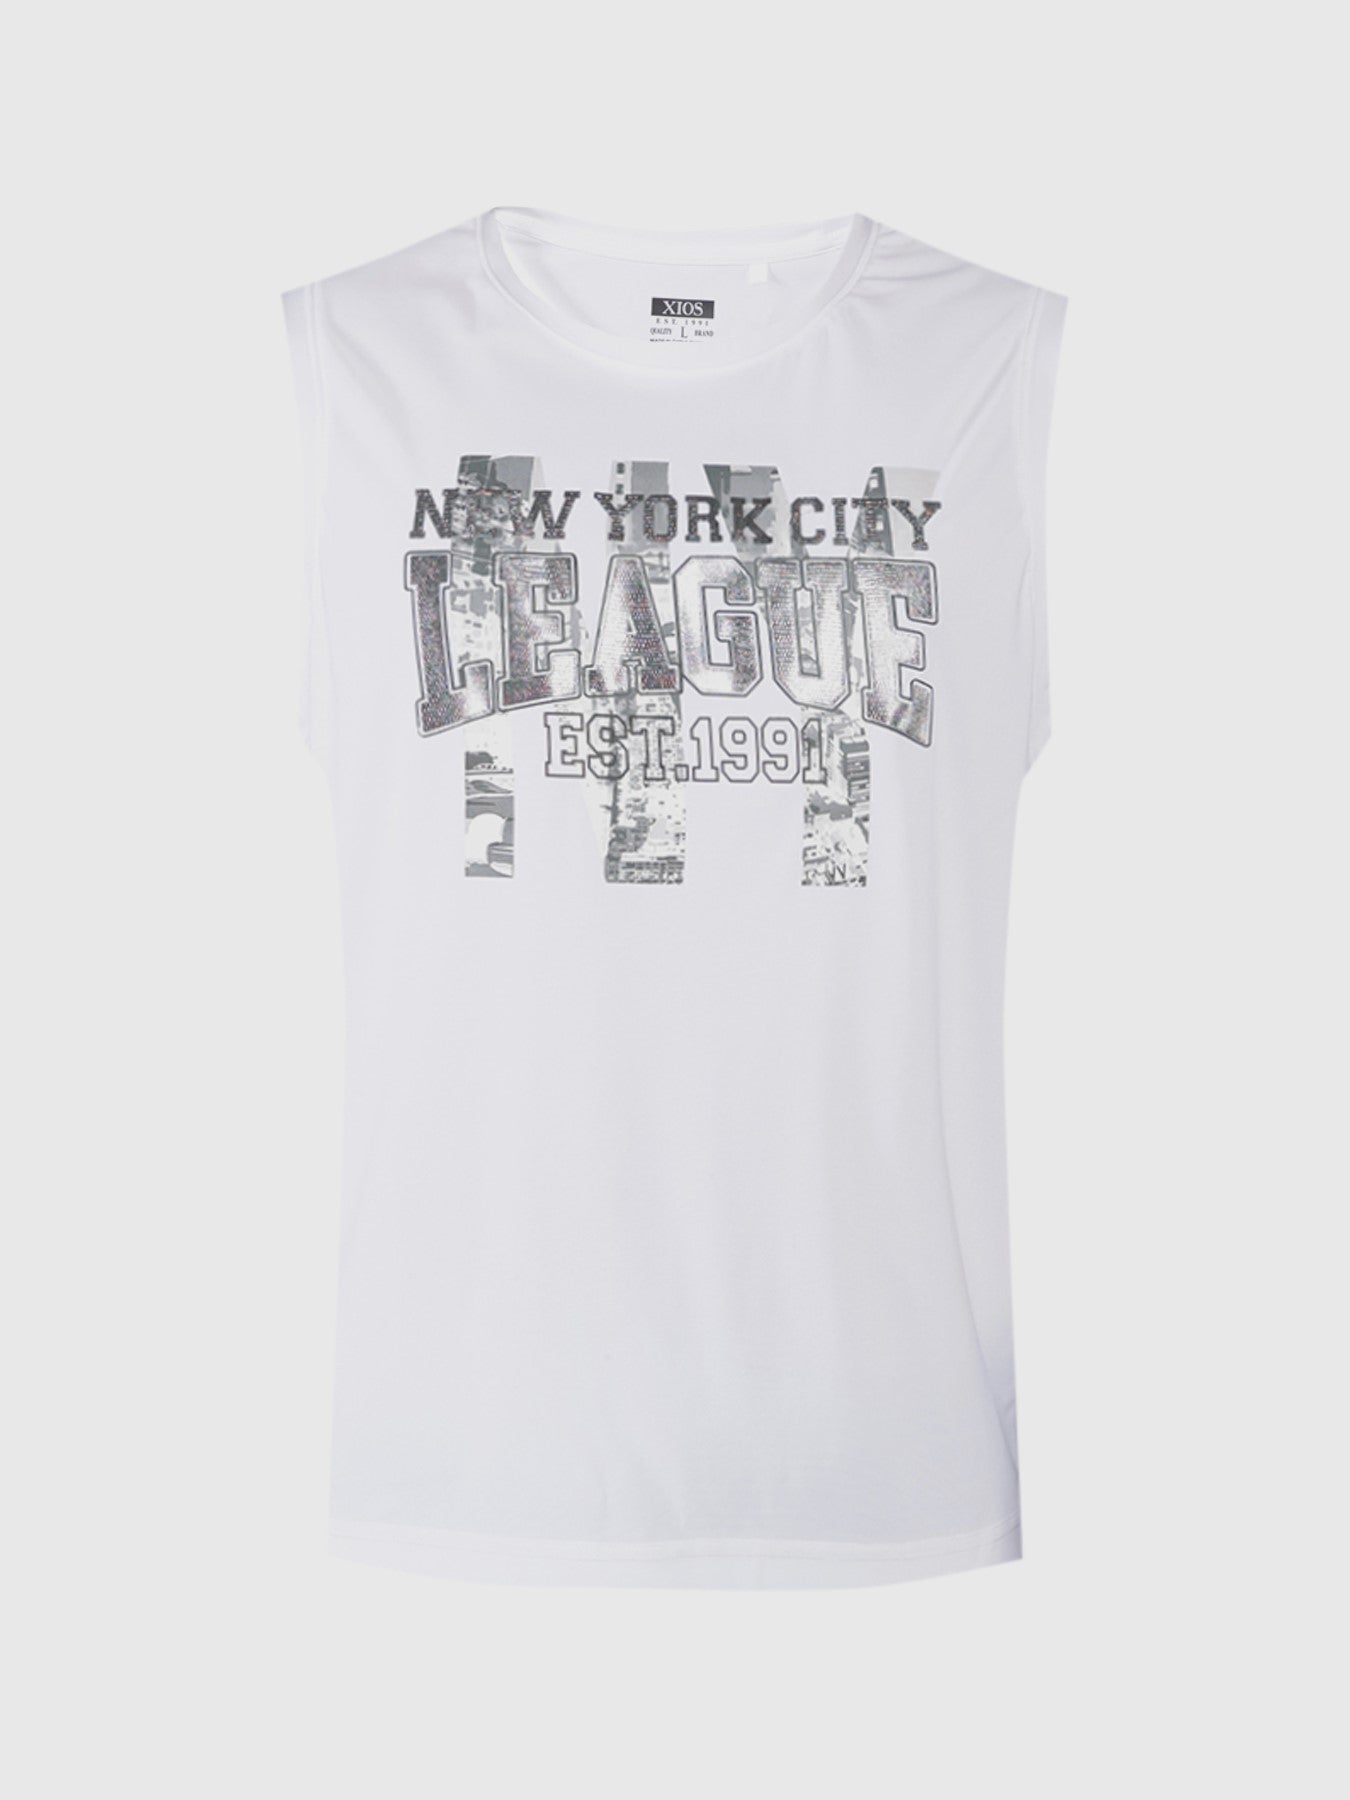 "NYC League" Muscle Shirt - XIOS America